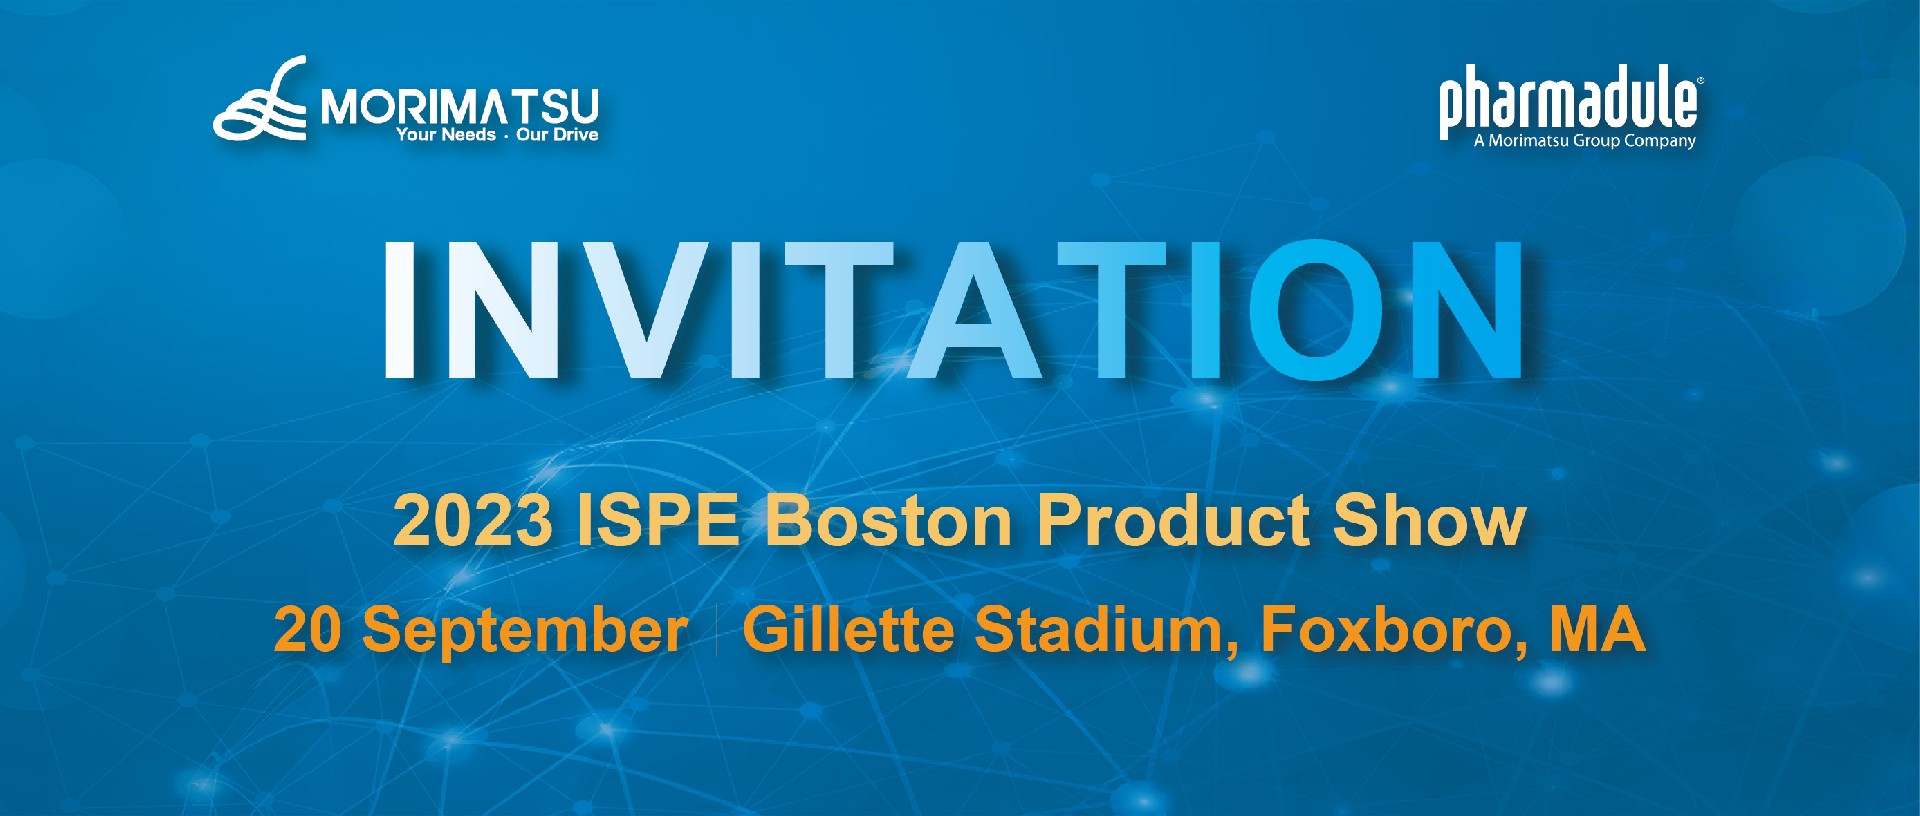 Invitation | Pharmadule Morimatsu AB Invites You to 2023 ISPE Boston Product Show